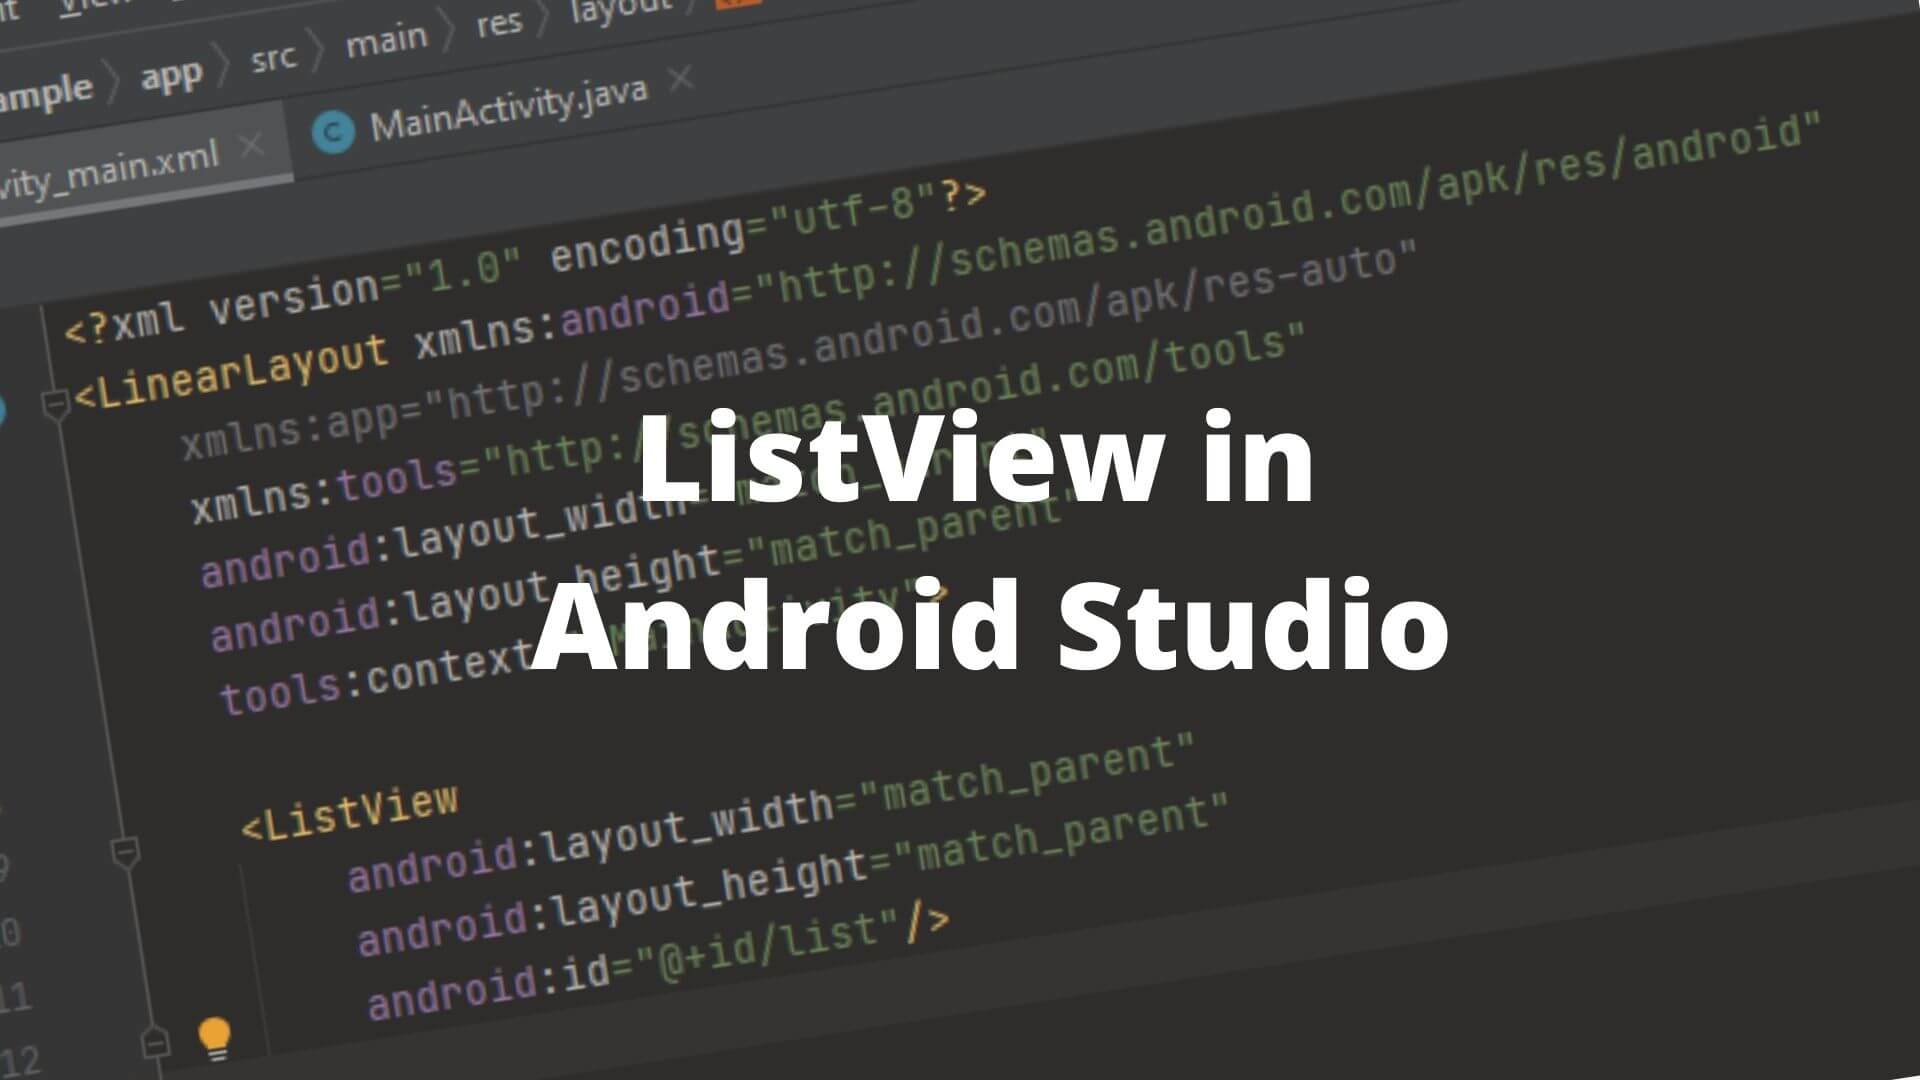 ListView in Android Studio